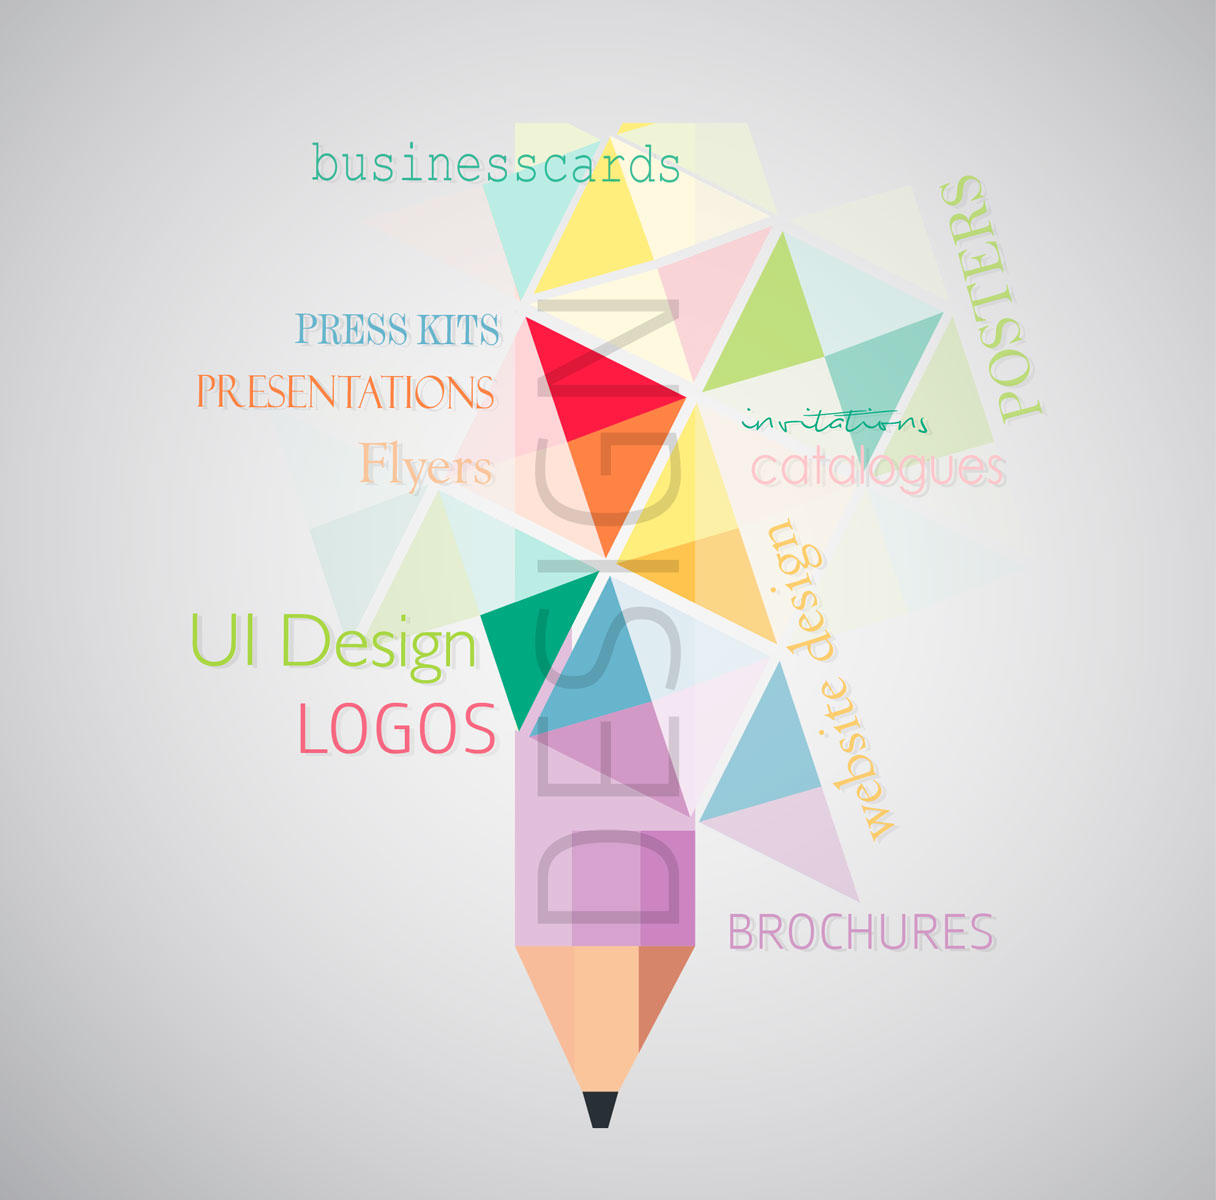 Logos, brochures, event materials, website design, application UI,